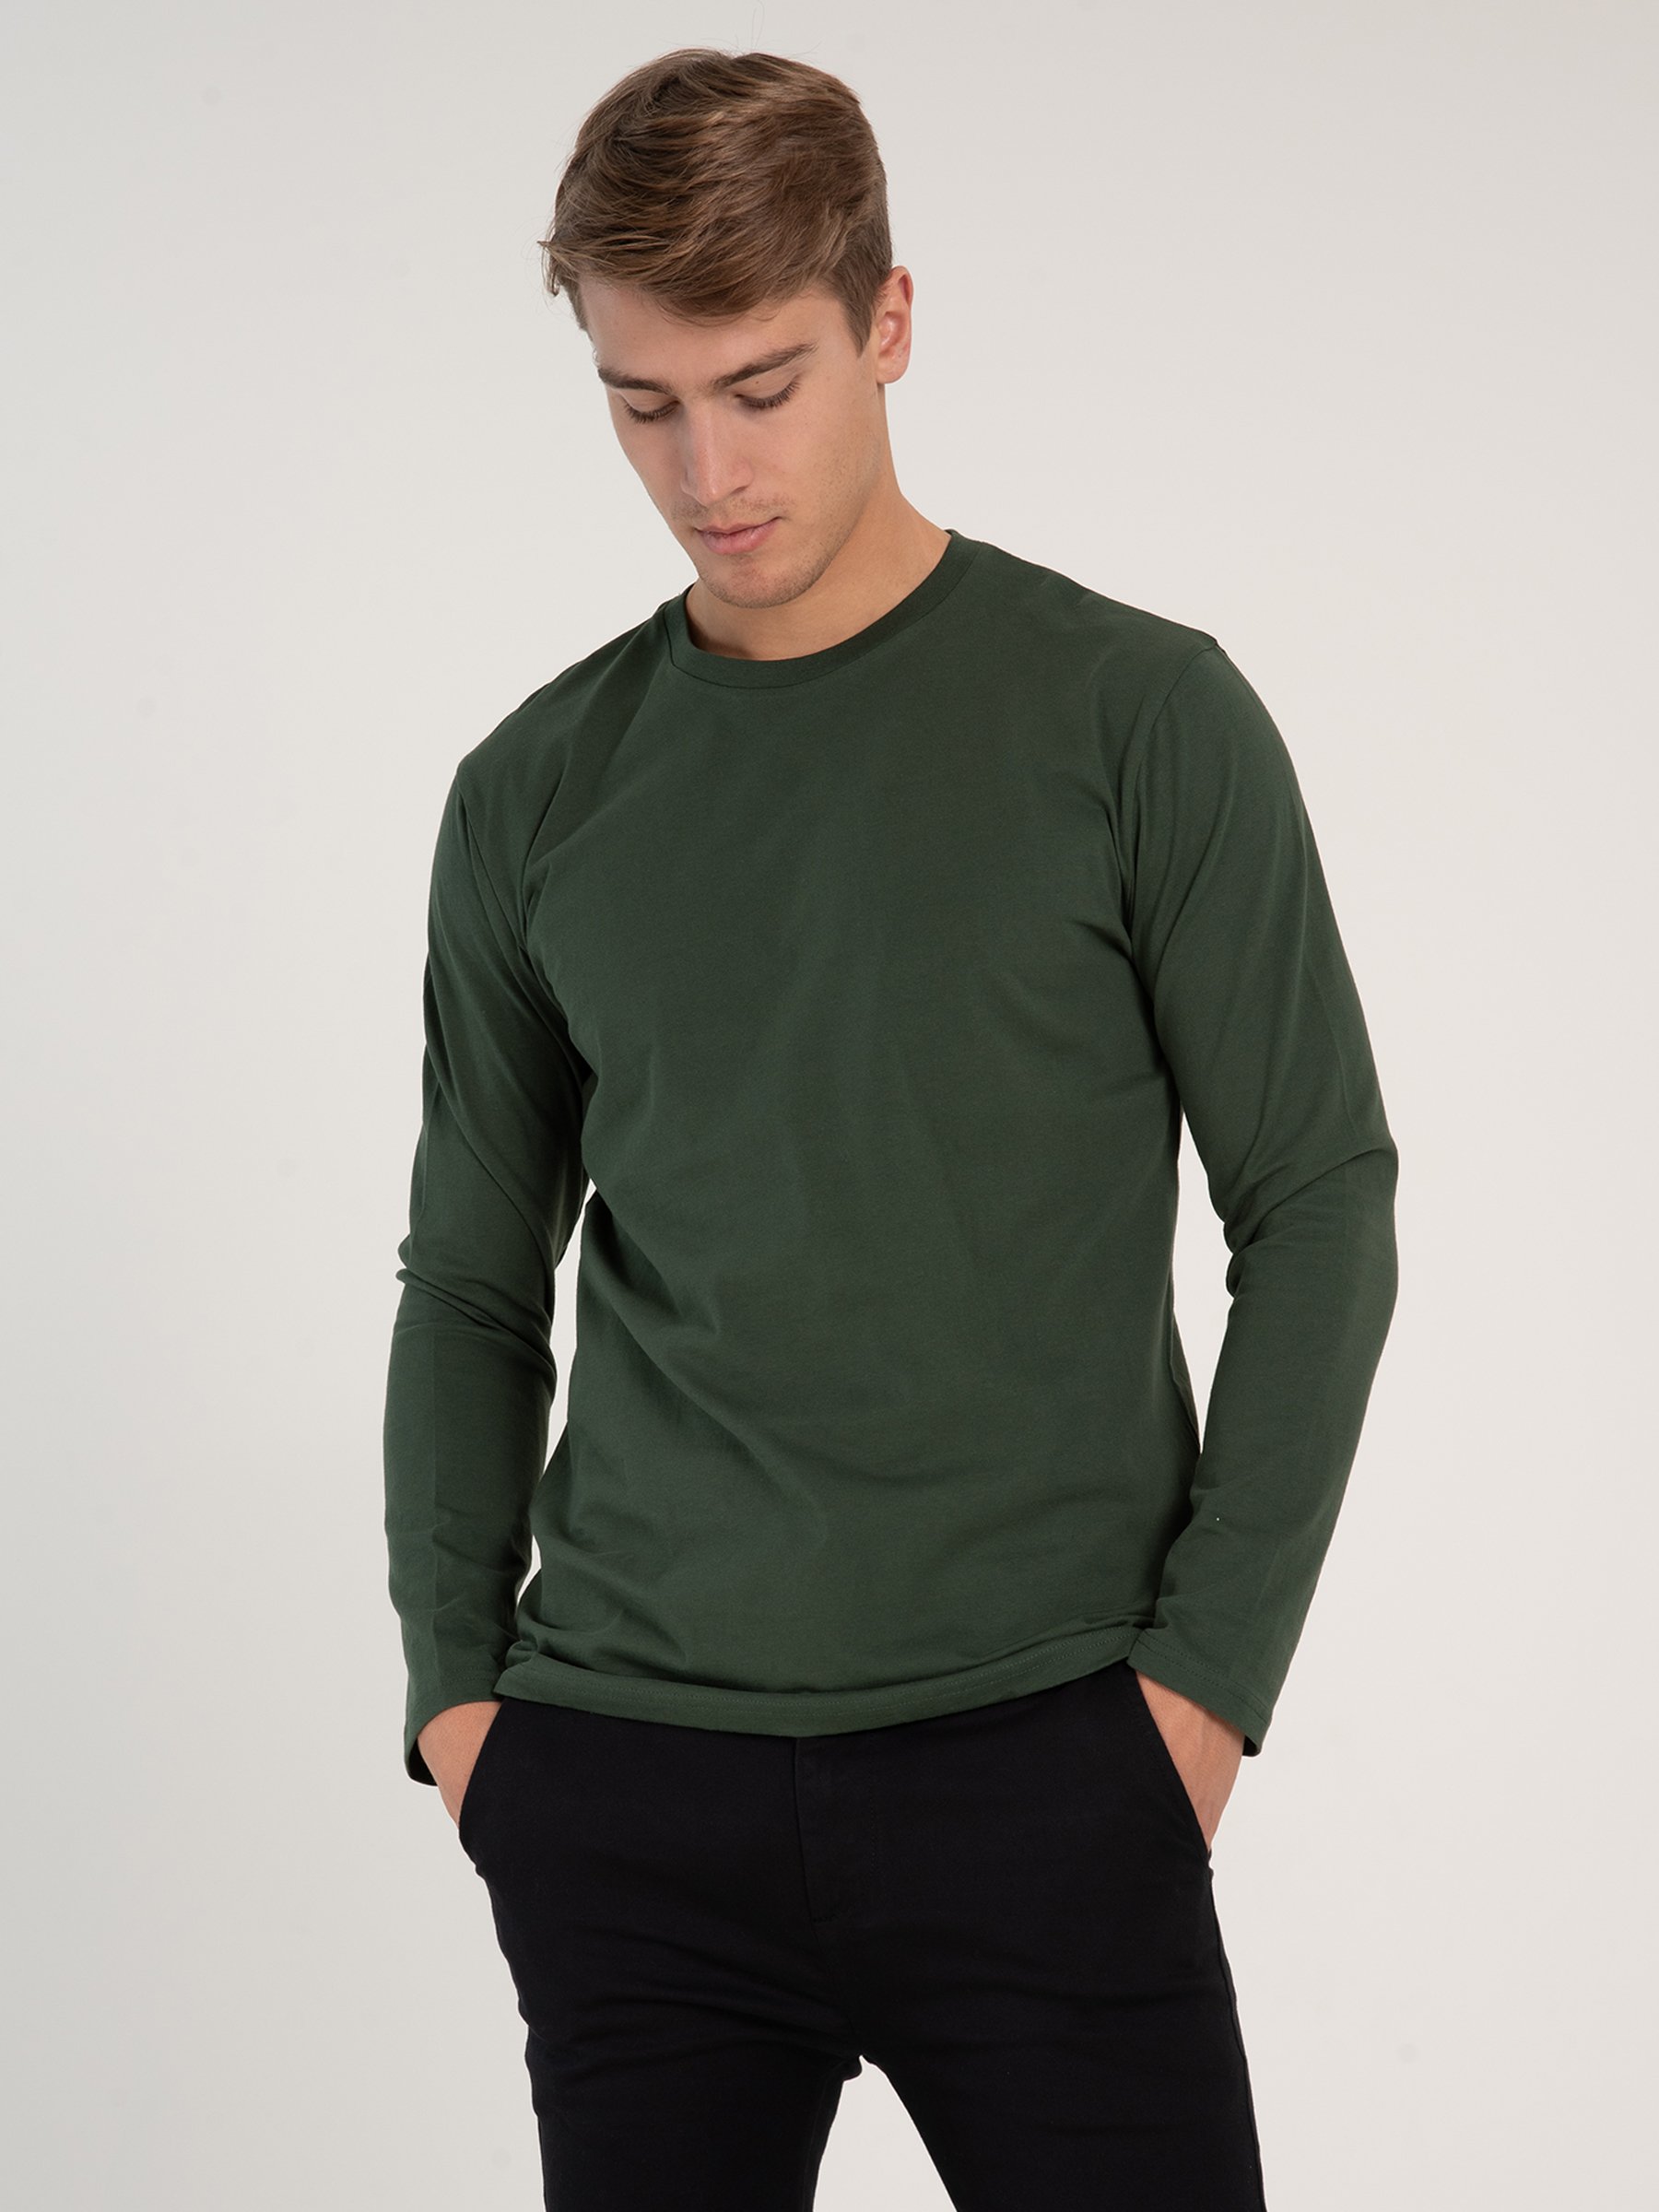 Mens Shirts Long Sleeve Casual Big and Tall Mens T Shirts Solid Muscle T-Shirt Tops Blouse Pullover Jumper Sweatshirts 